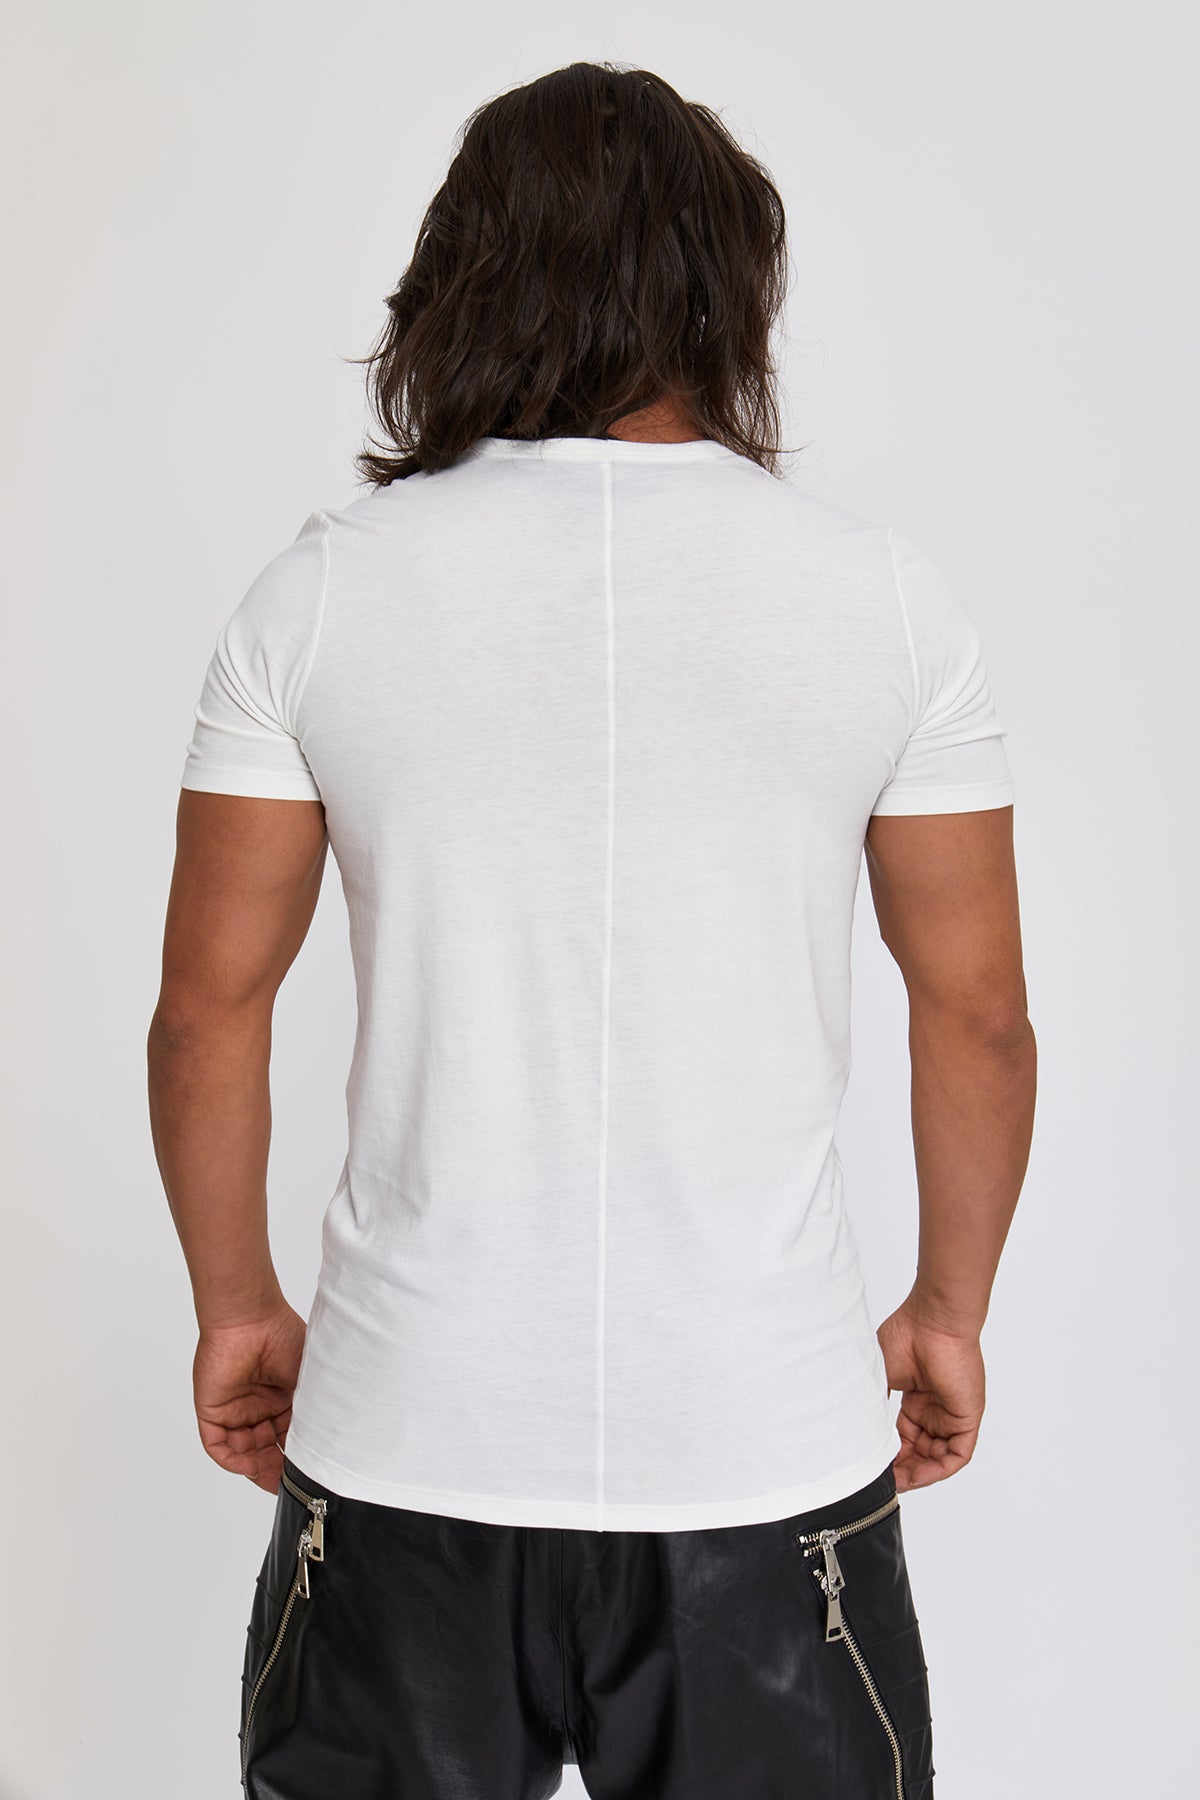 Men's Fit T-Shirts 100 % Great quality Turkish Pima cotton preshrunk. Muscle Fit. Sports. Designer. Trendy. T-shirt.